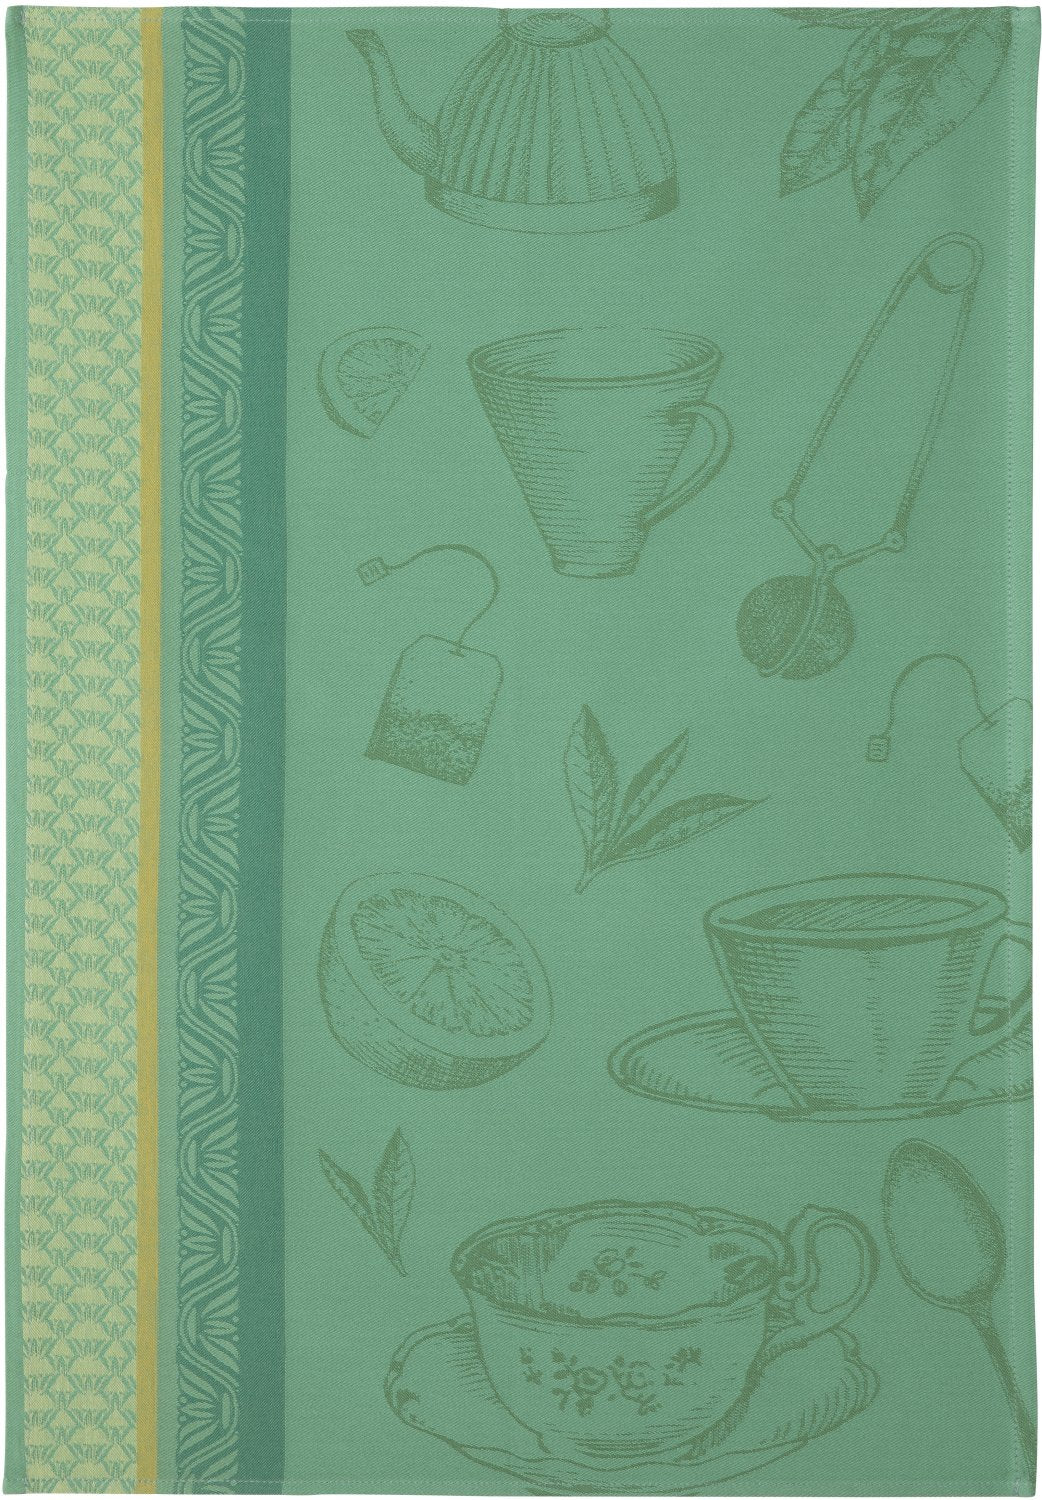 Coucke“Meli Melo Thé", Woven cotton tea towel. Designed in France.